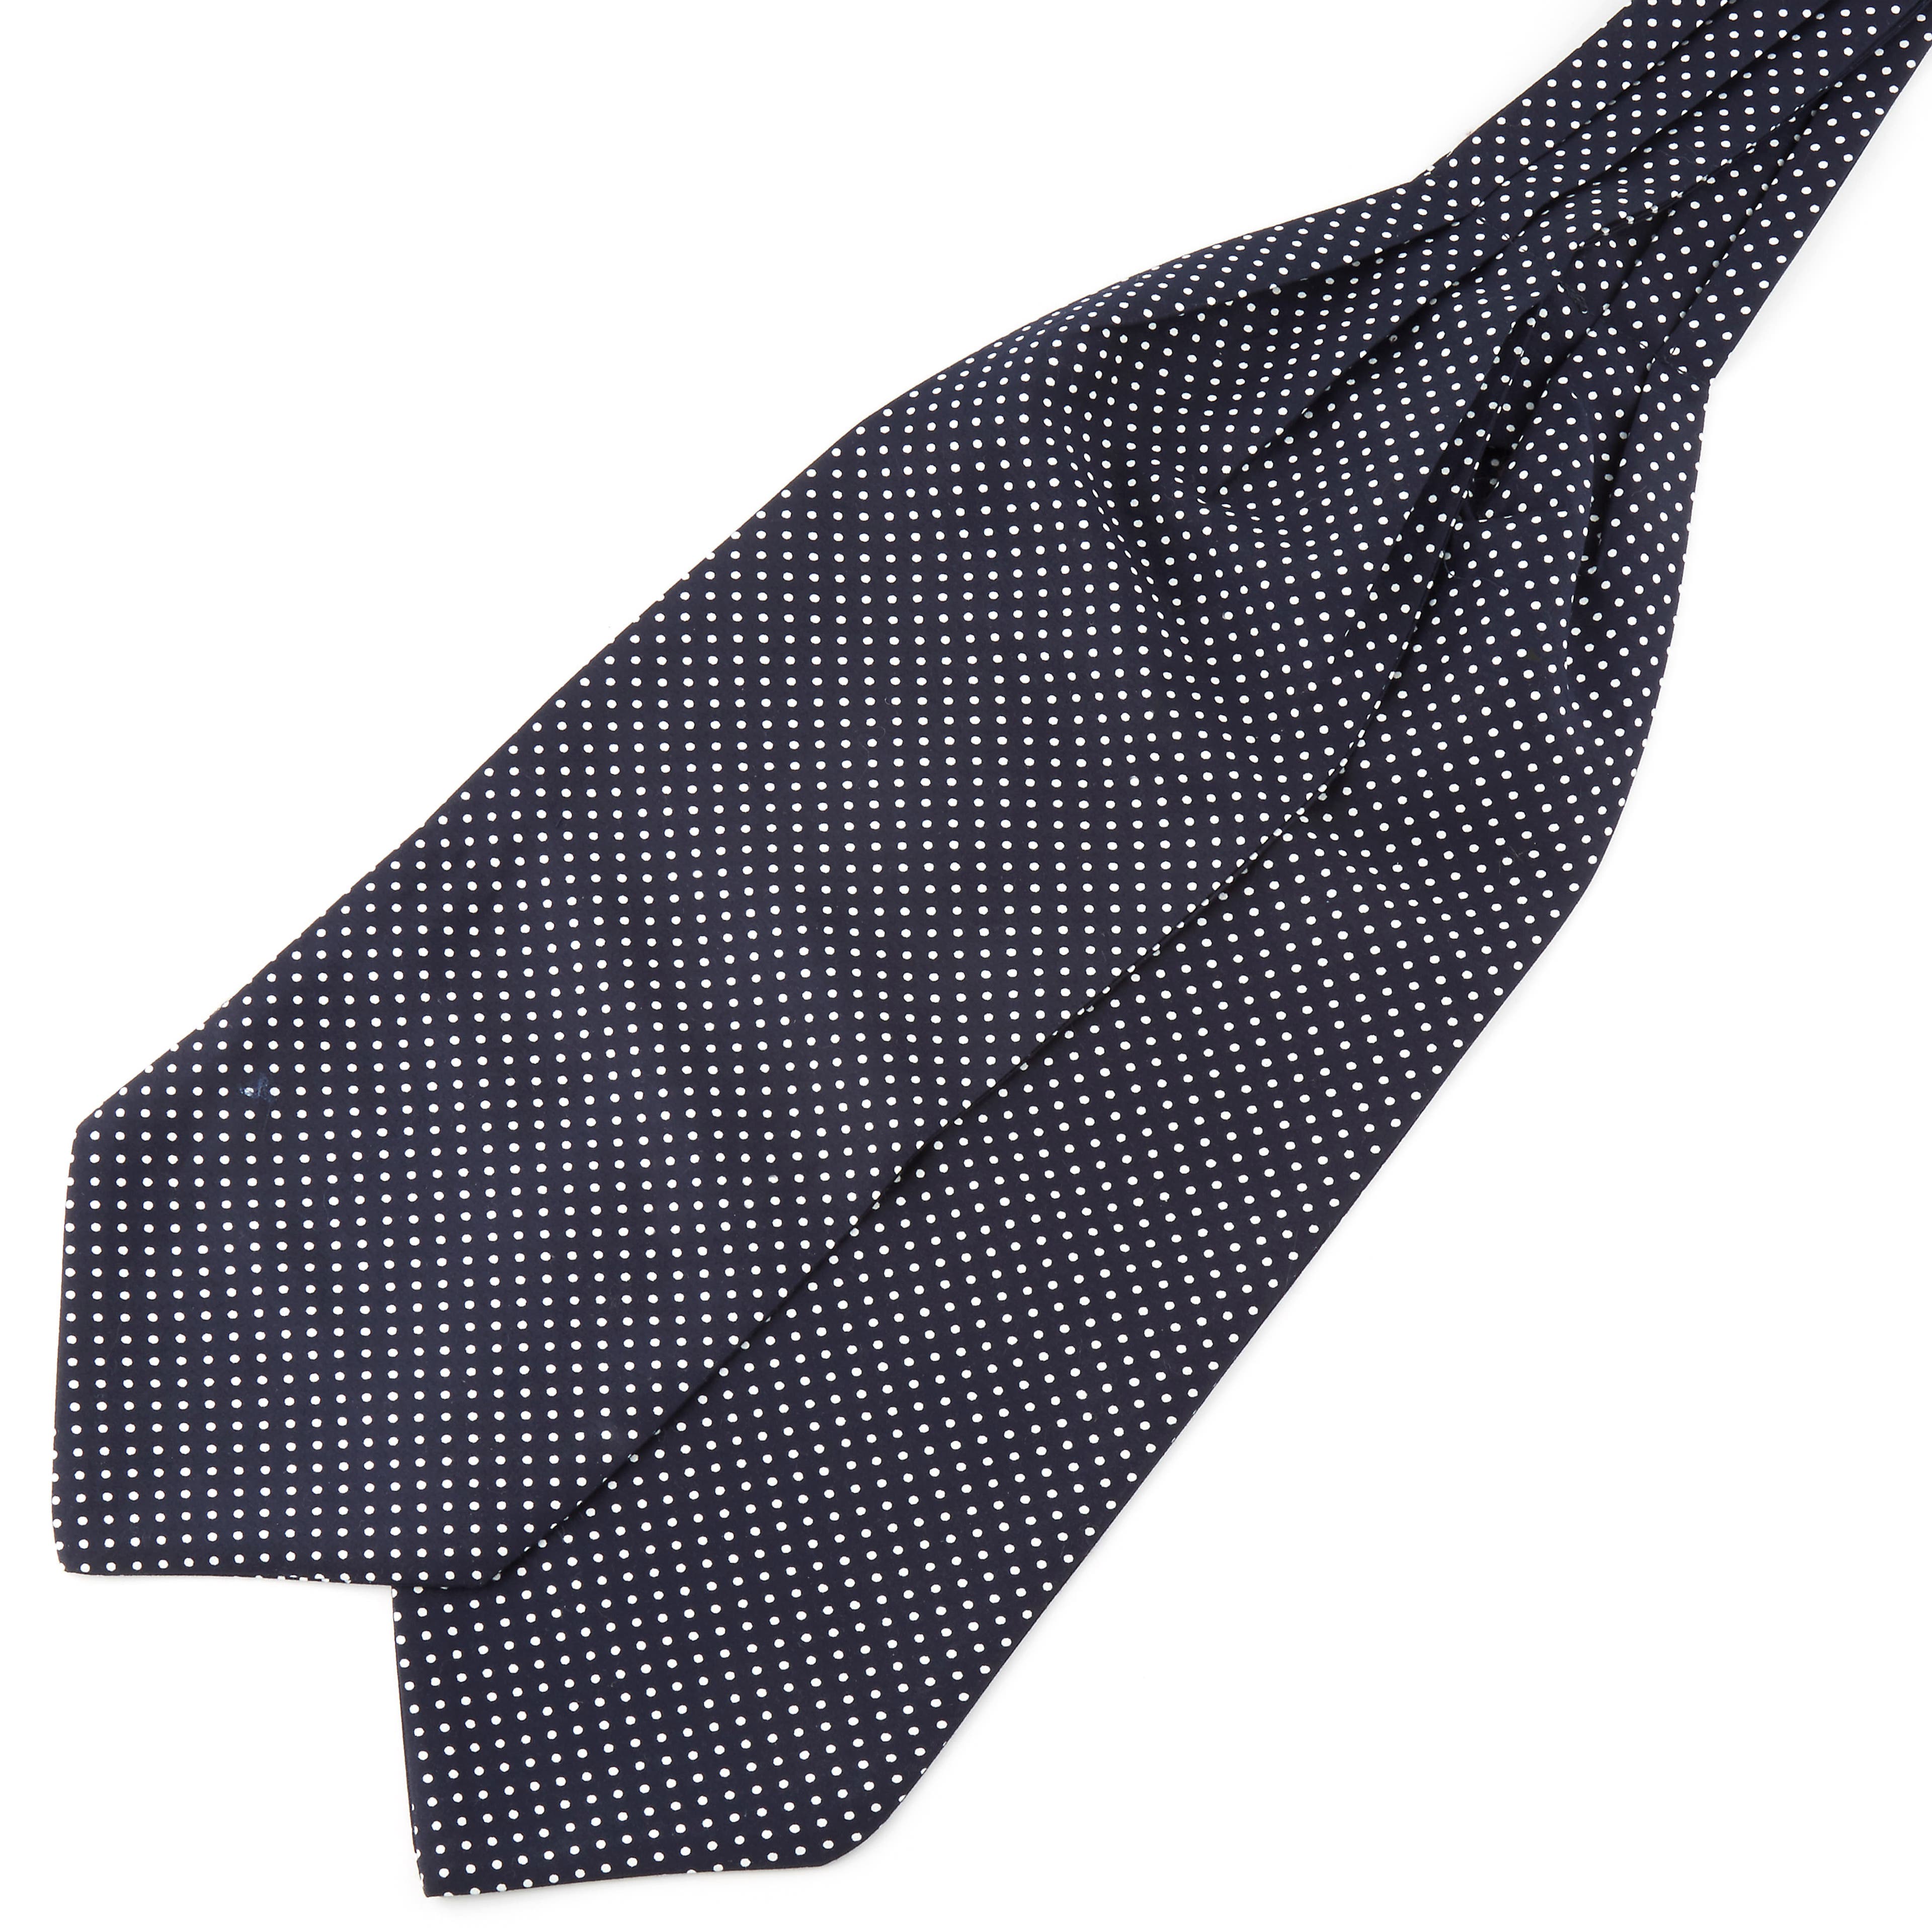 Cravate Ascot bleu marine à pois blancs